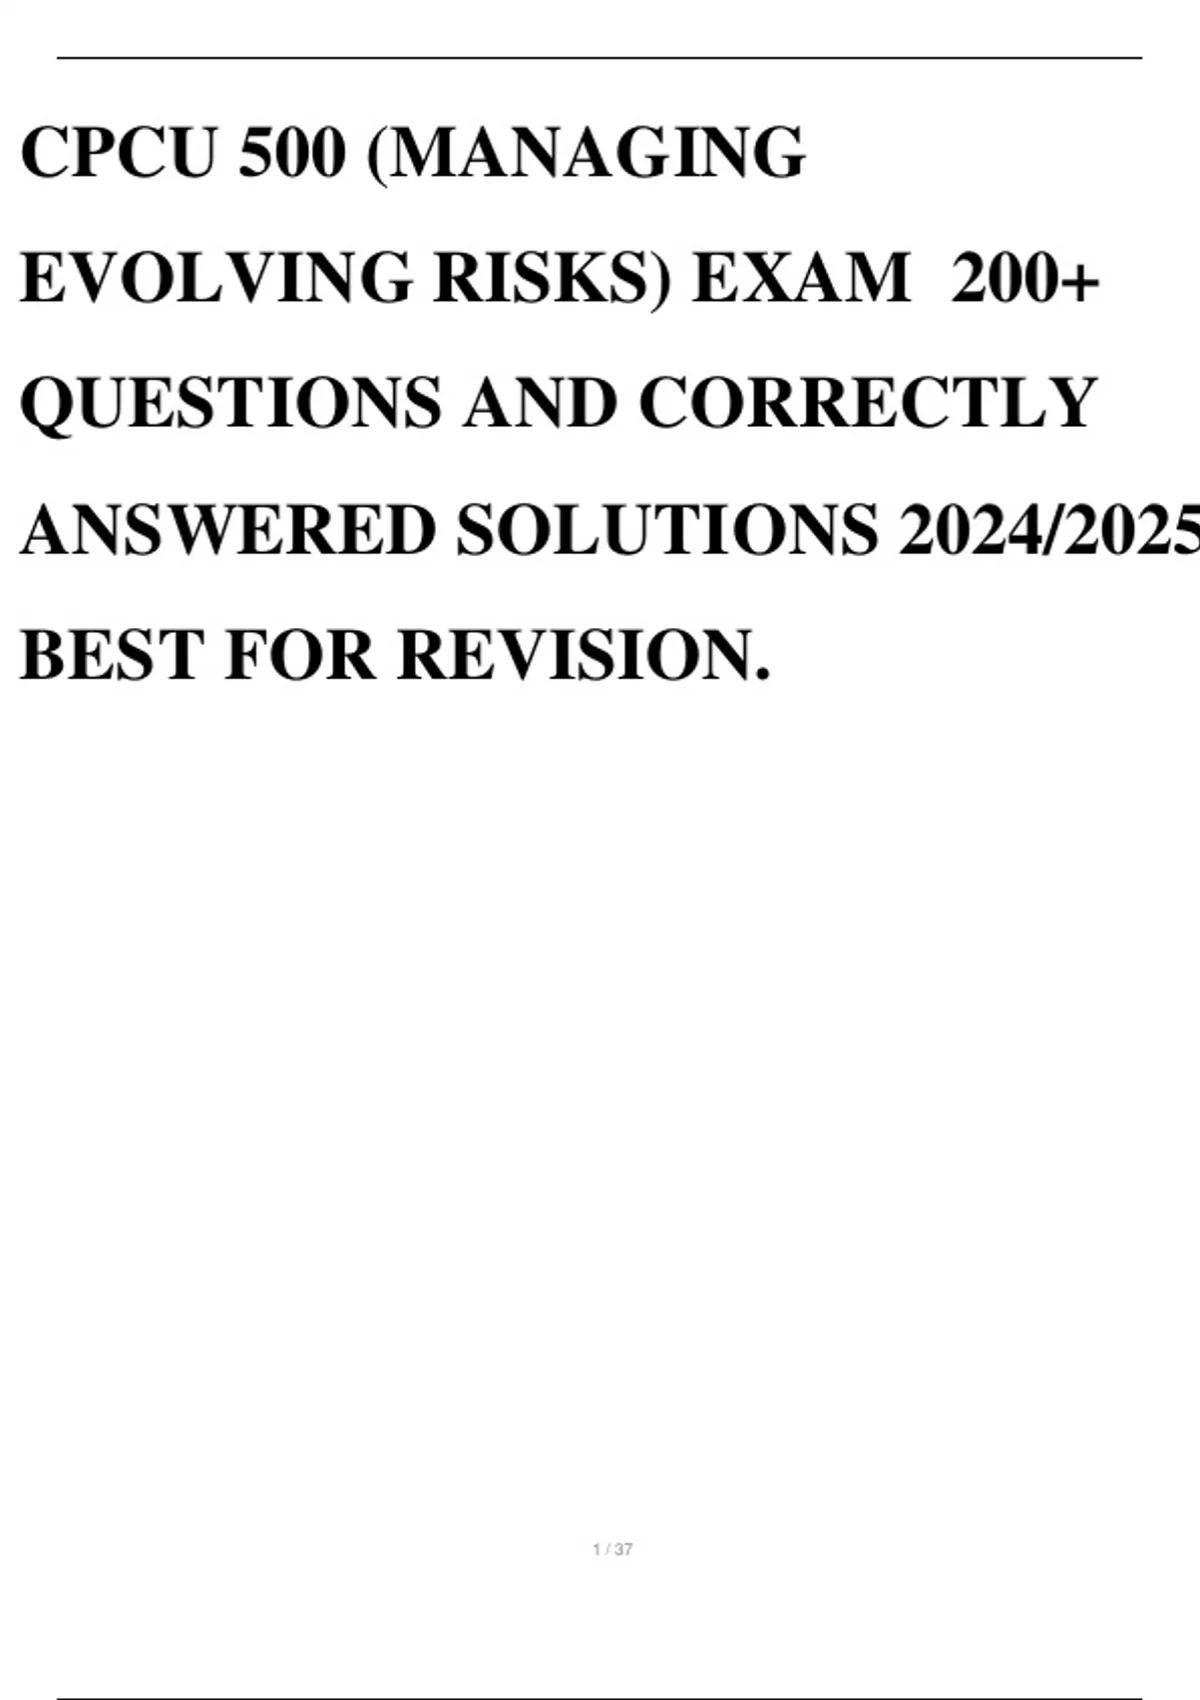 CPCU 500 (MANAGING EVOLVING RISKS) EXAM 200+ QUESTIONS AND